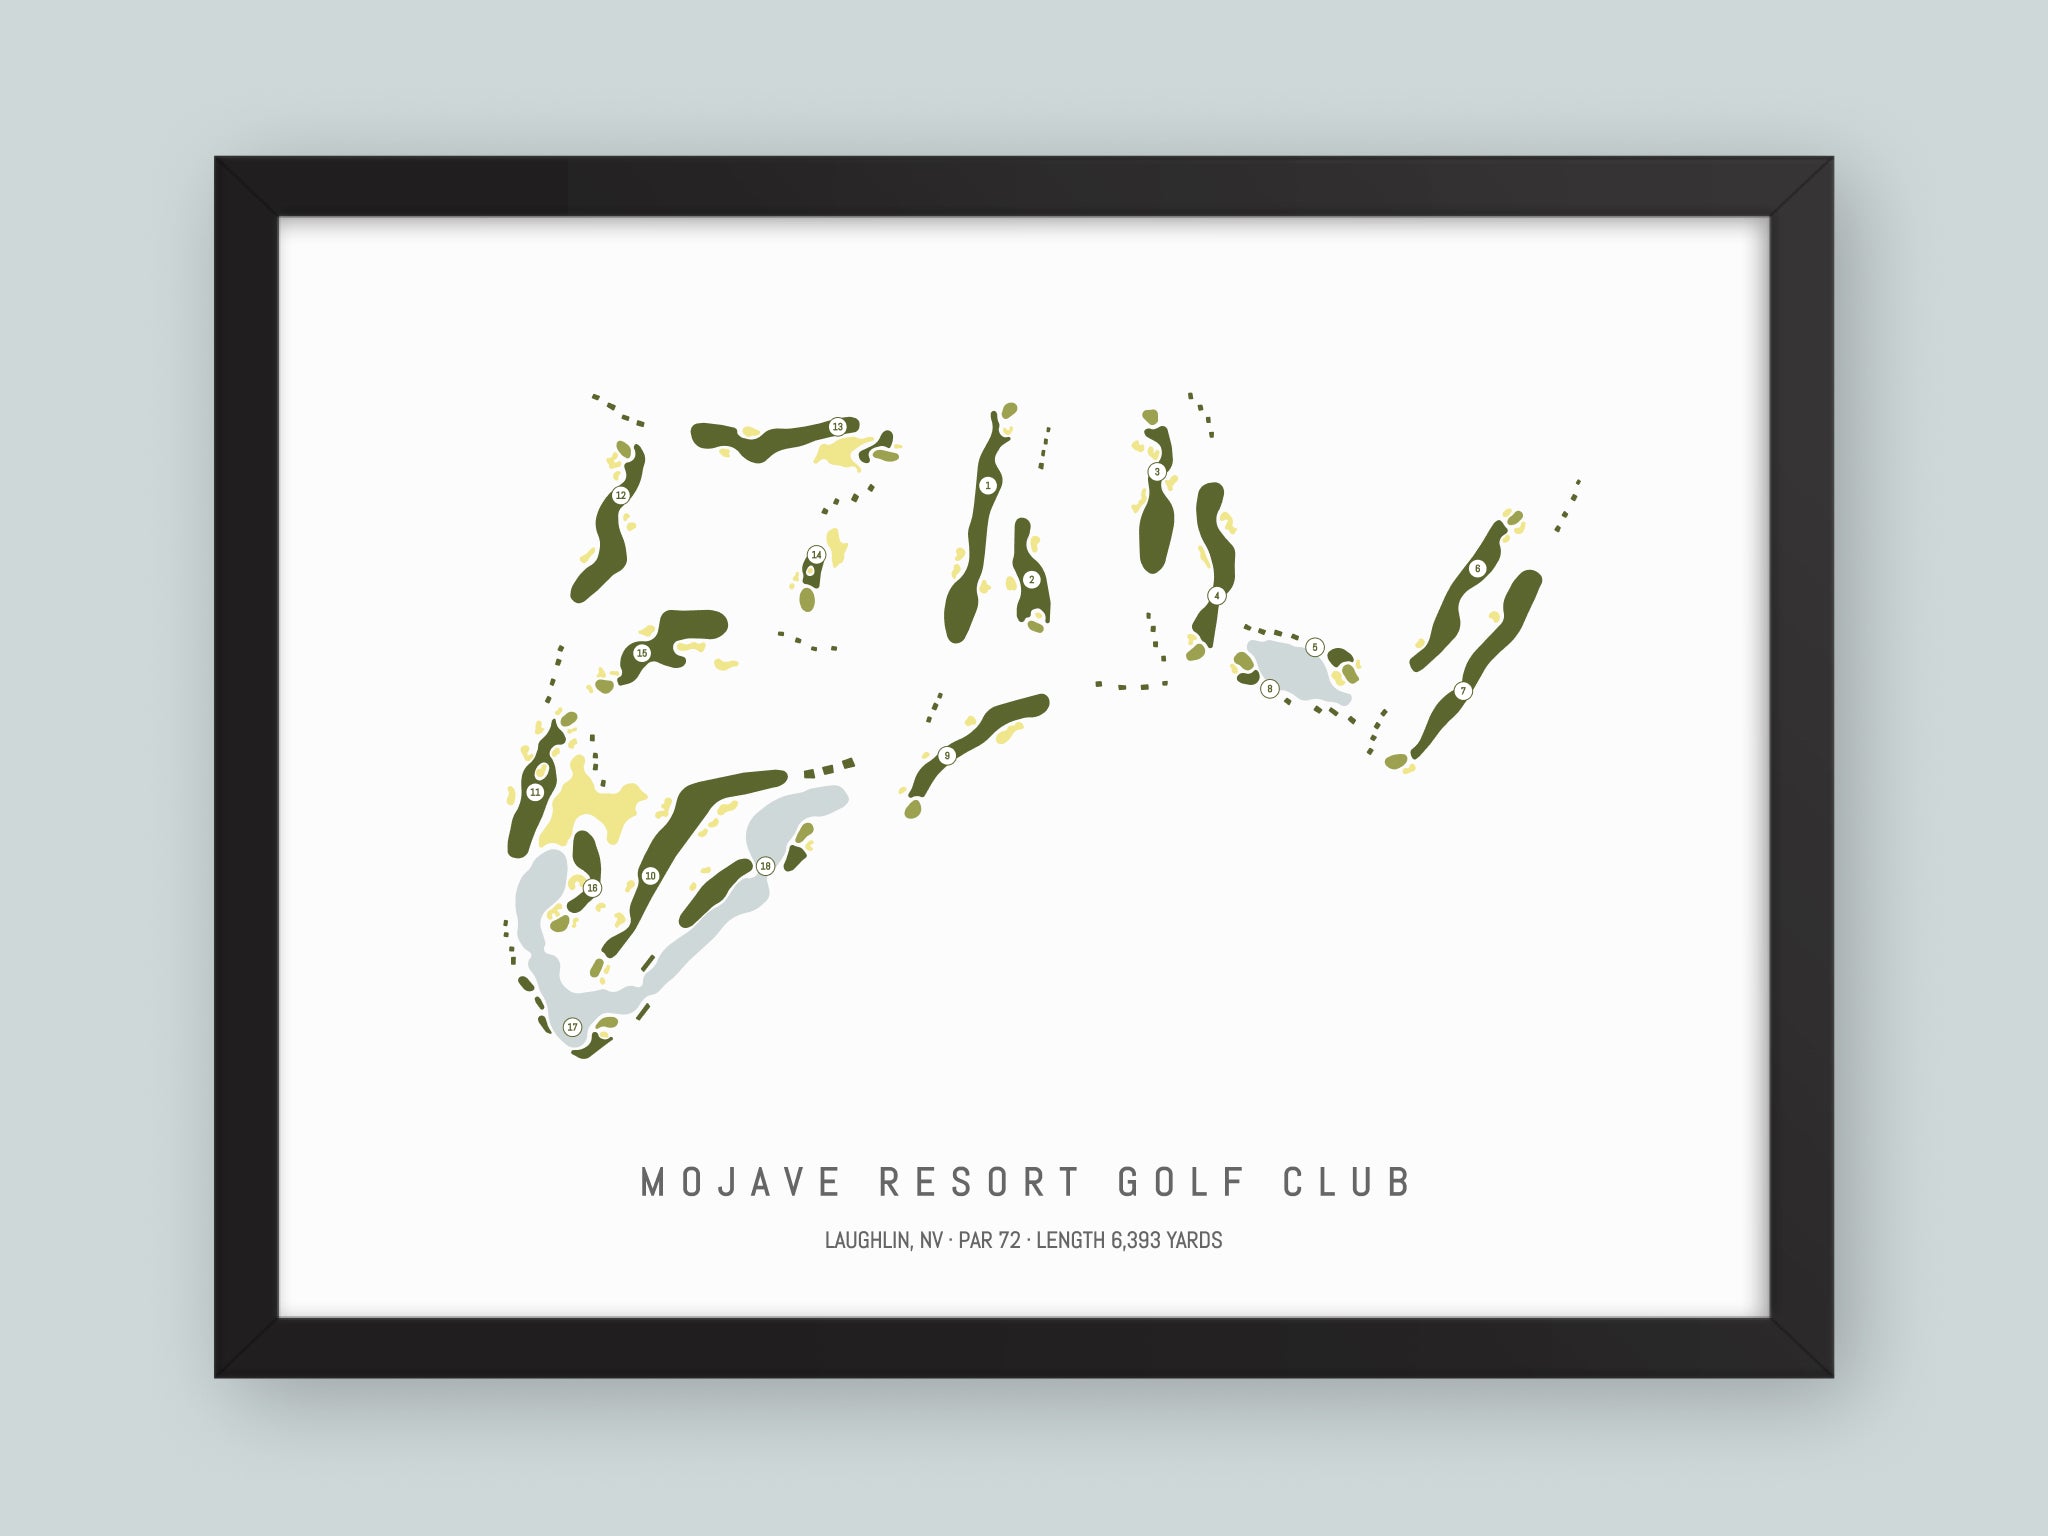 Mojave-Resort-Golf-Club-NV--Black-Frame-24x18-With-Hole-Numbers